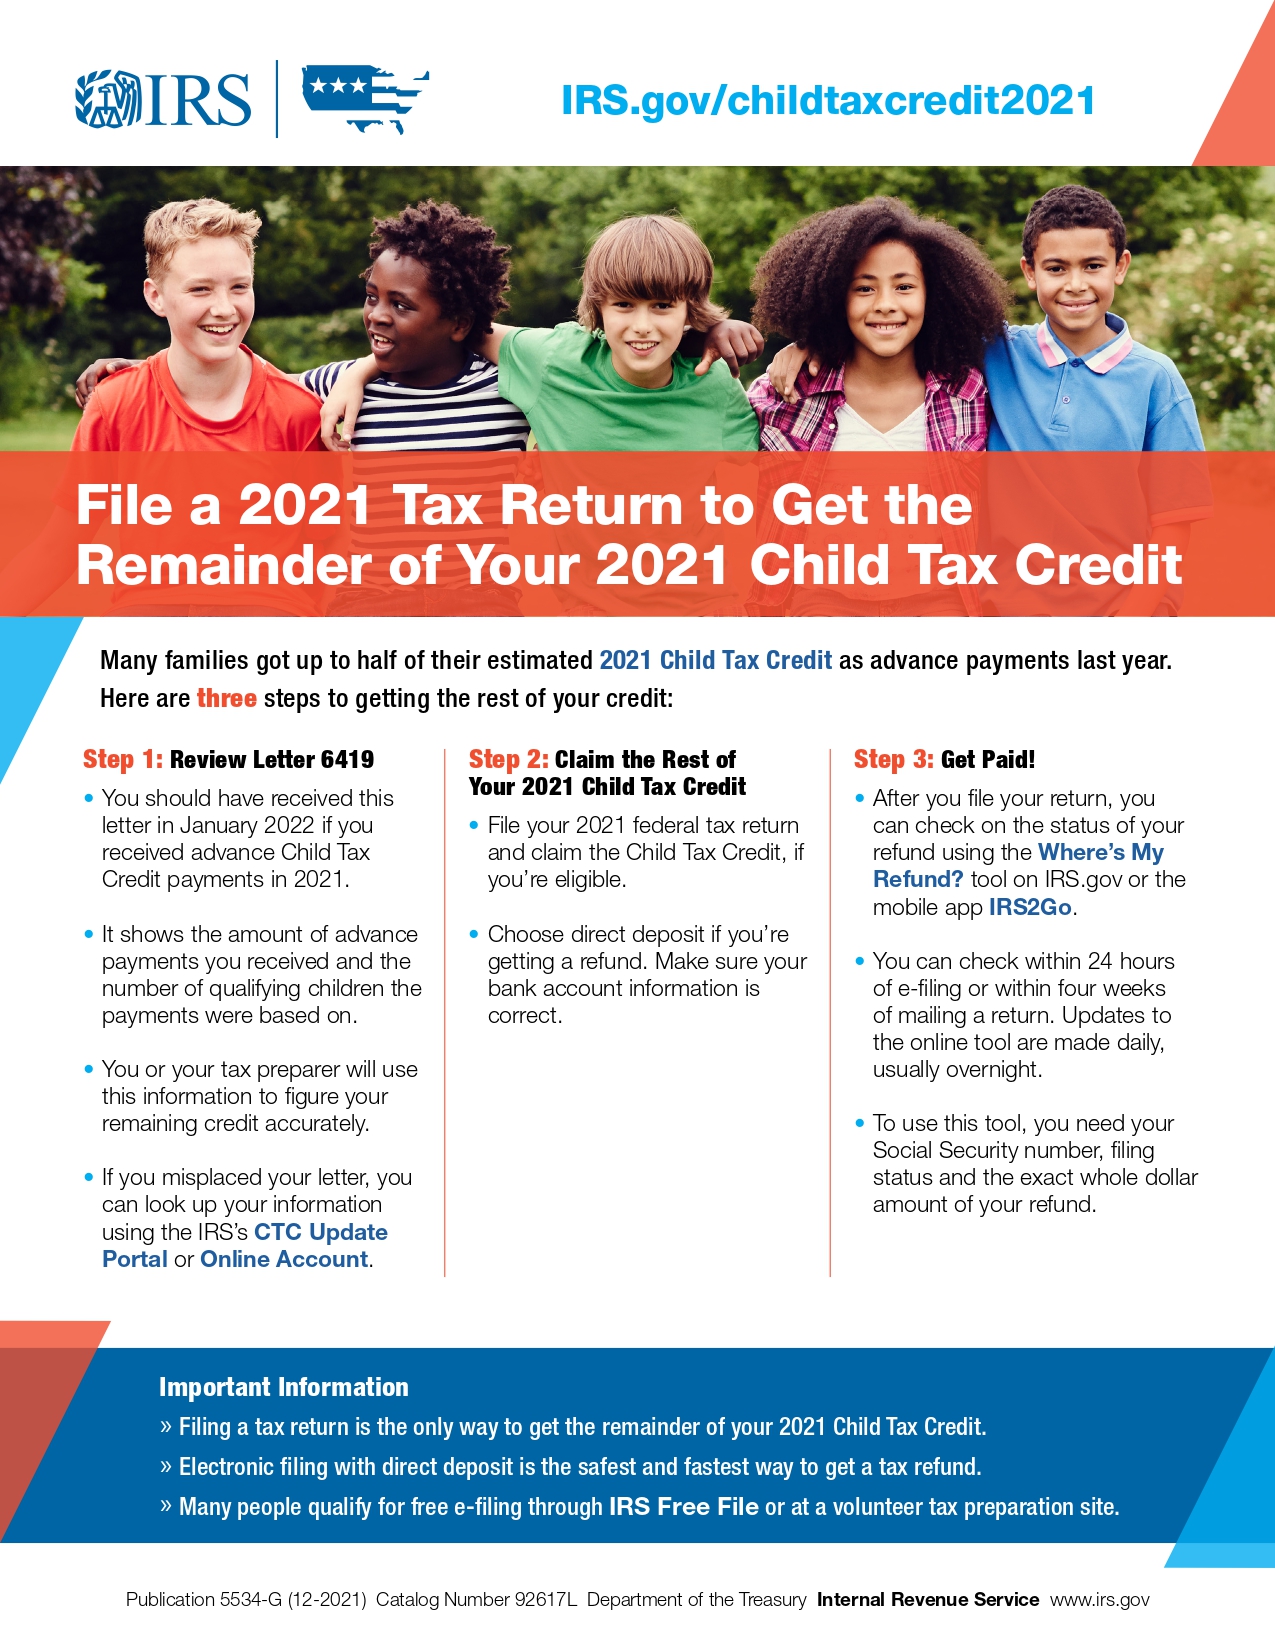 Child tax credit flyer